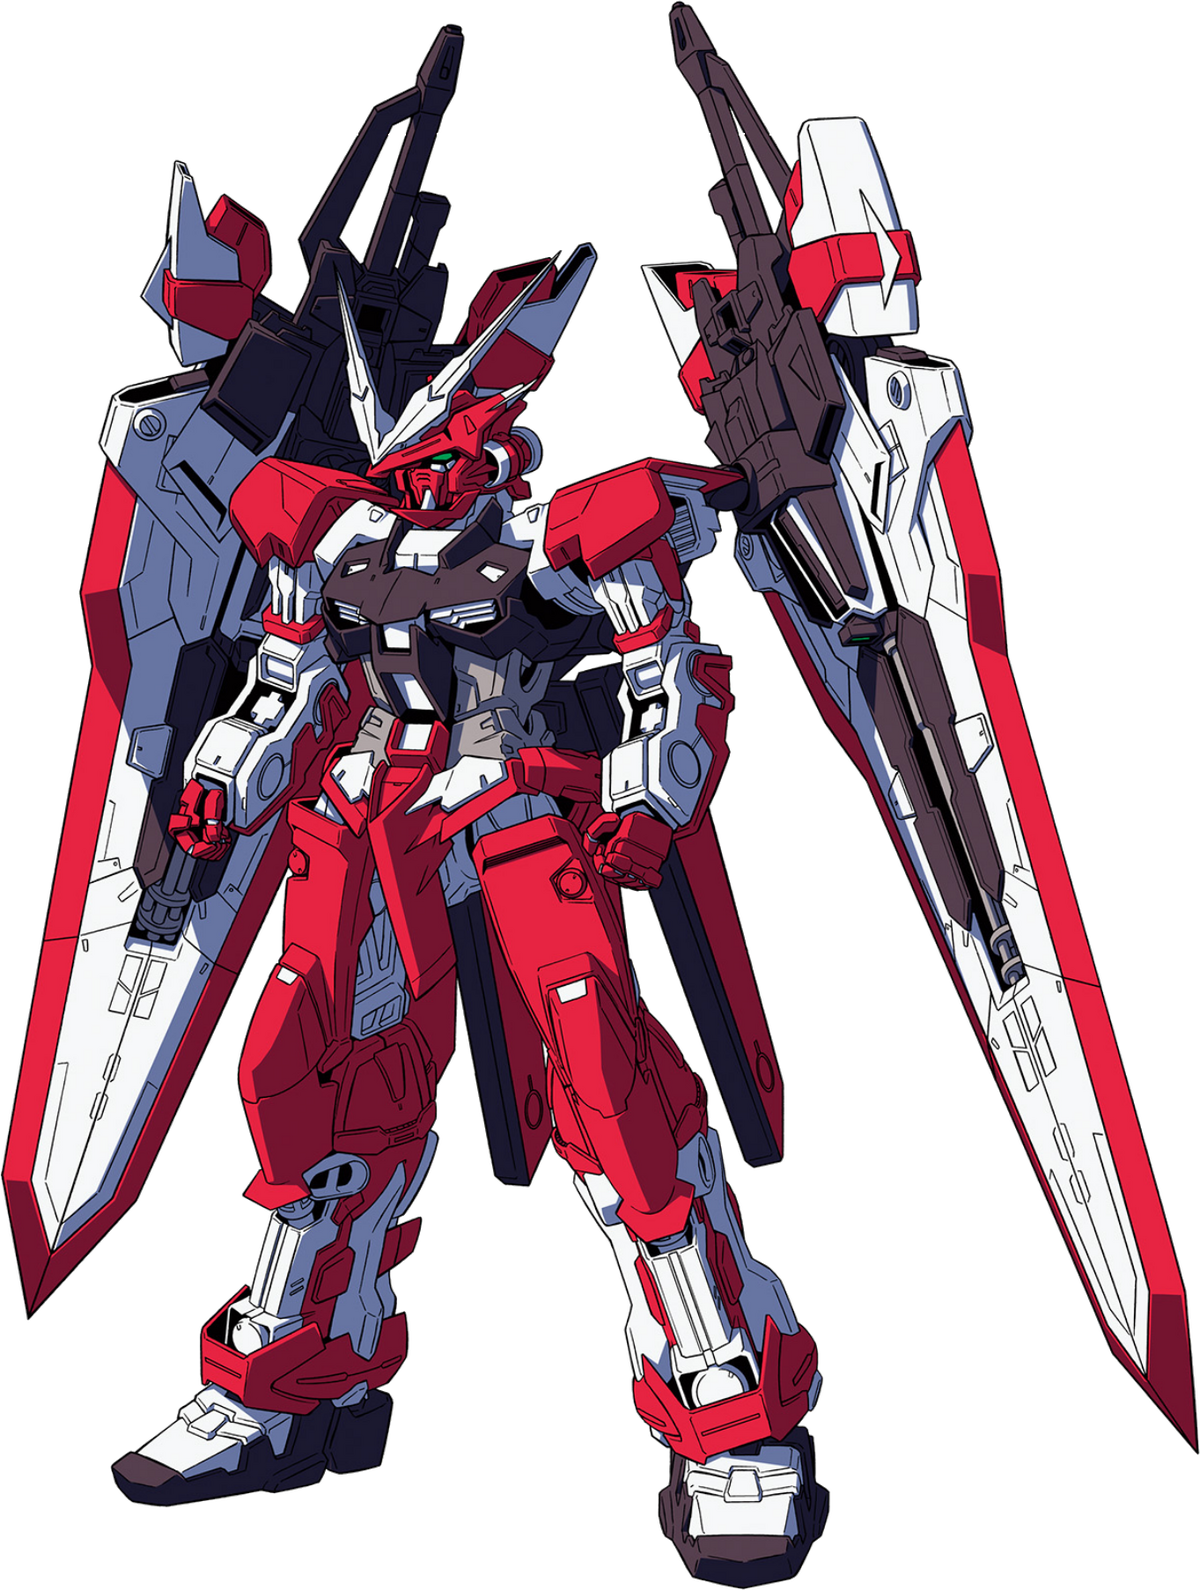 MBF-02VV Gundam Astray Turn Red, The Gundam Wiki